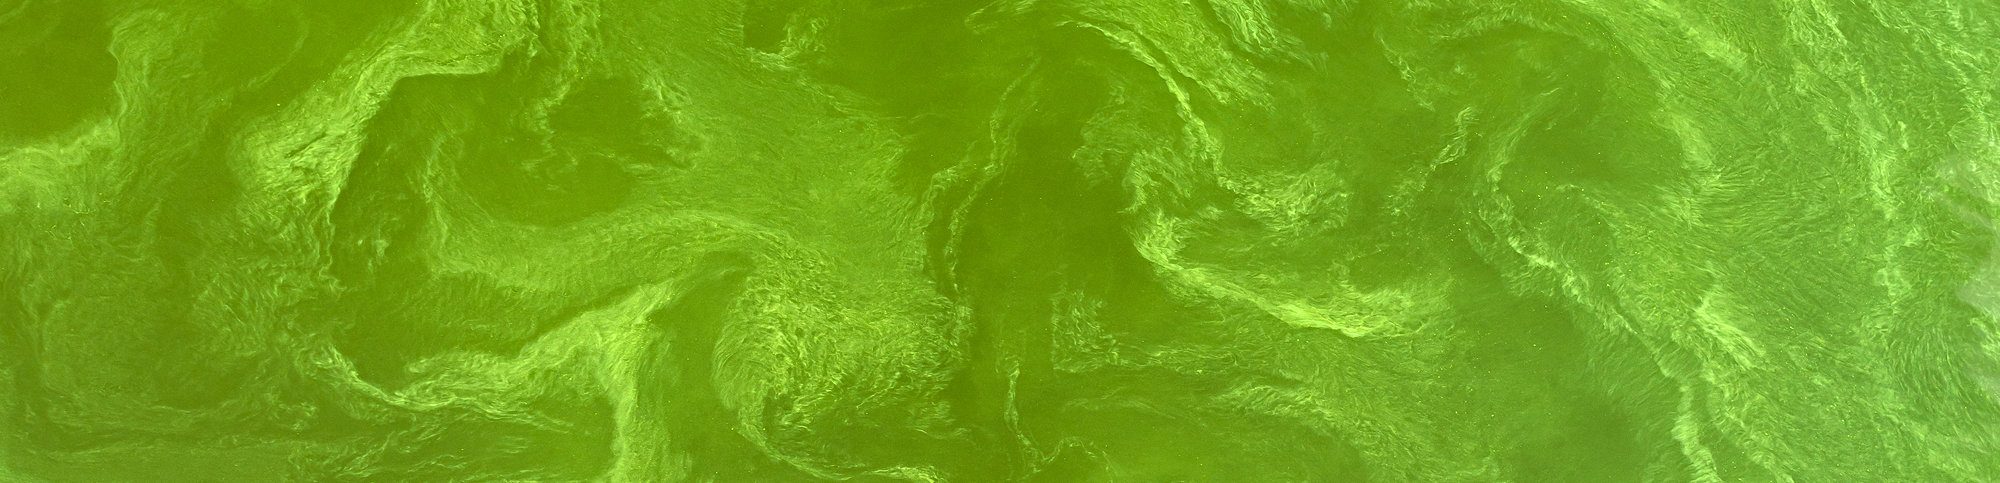 Green Cyanobacteria Bloom in Water